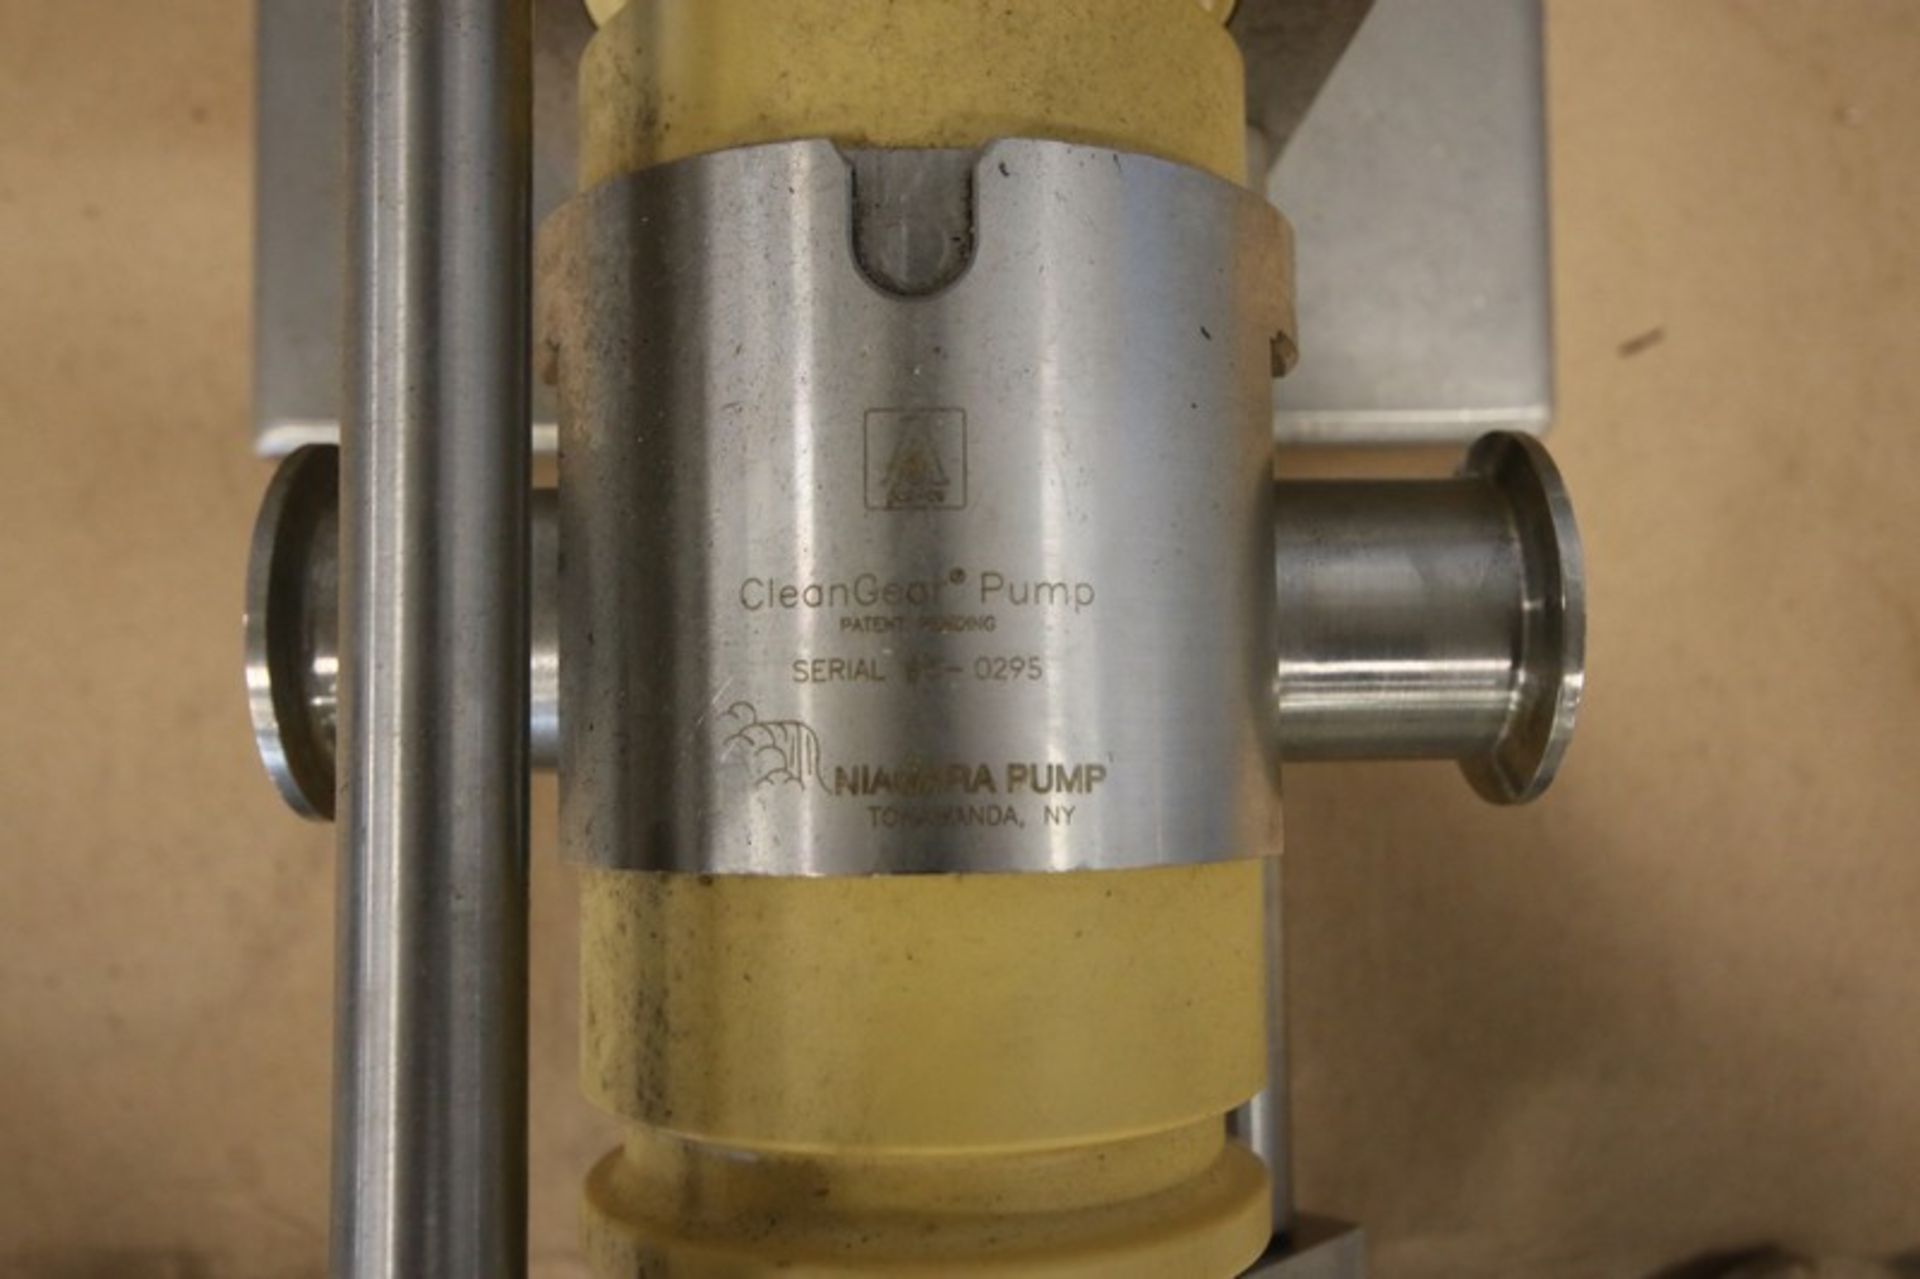 Niagara Pump CleanGear Pump, S/N 6-0295, with Pneumatic Internal Controls - Image 4 of 9